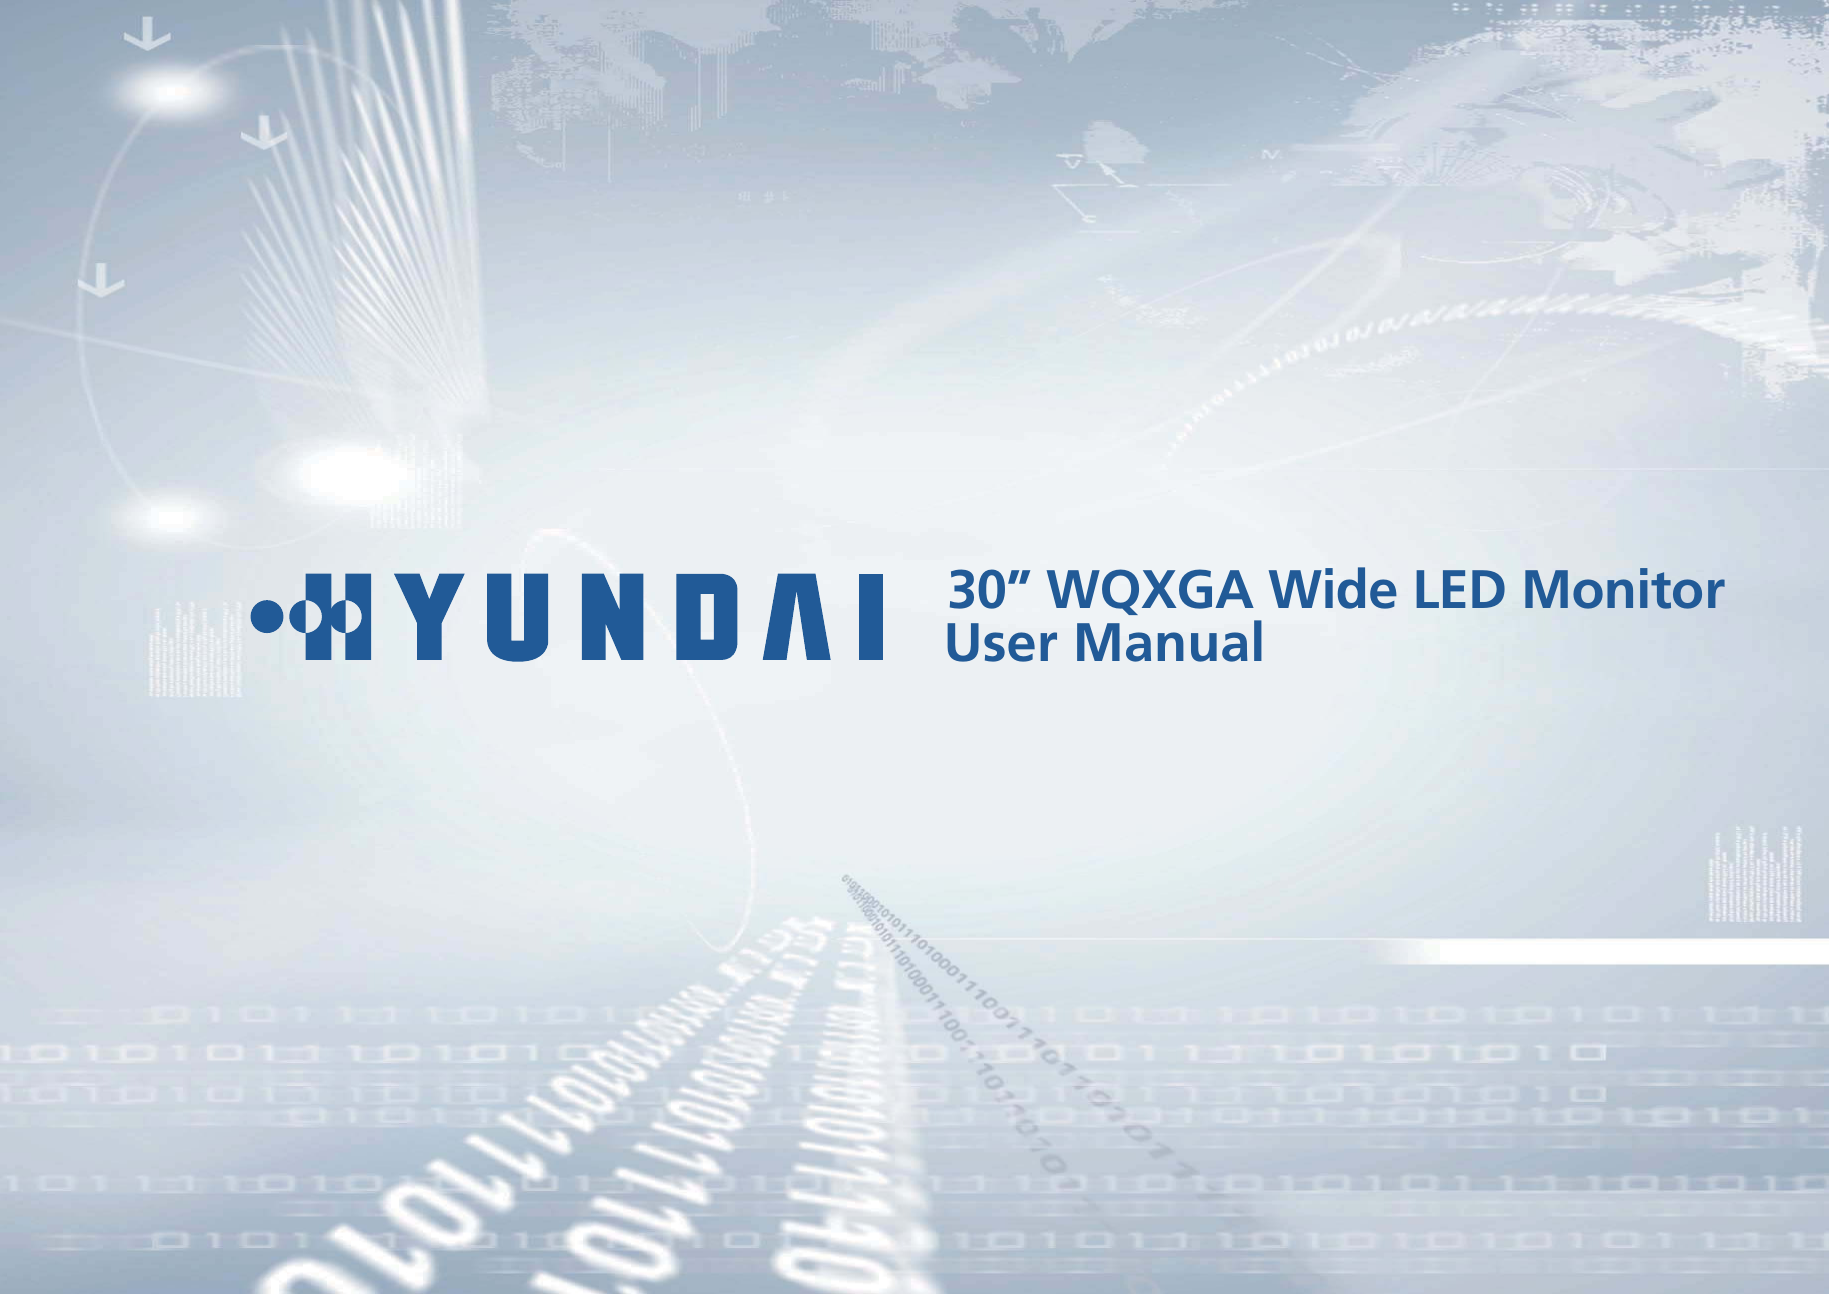 30” WQXGA Wide LED Monitor User Manual 